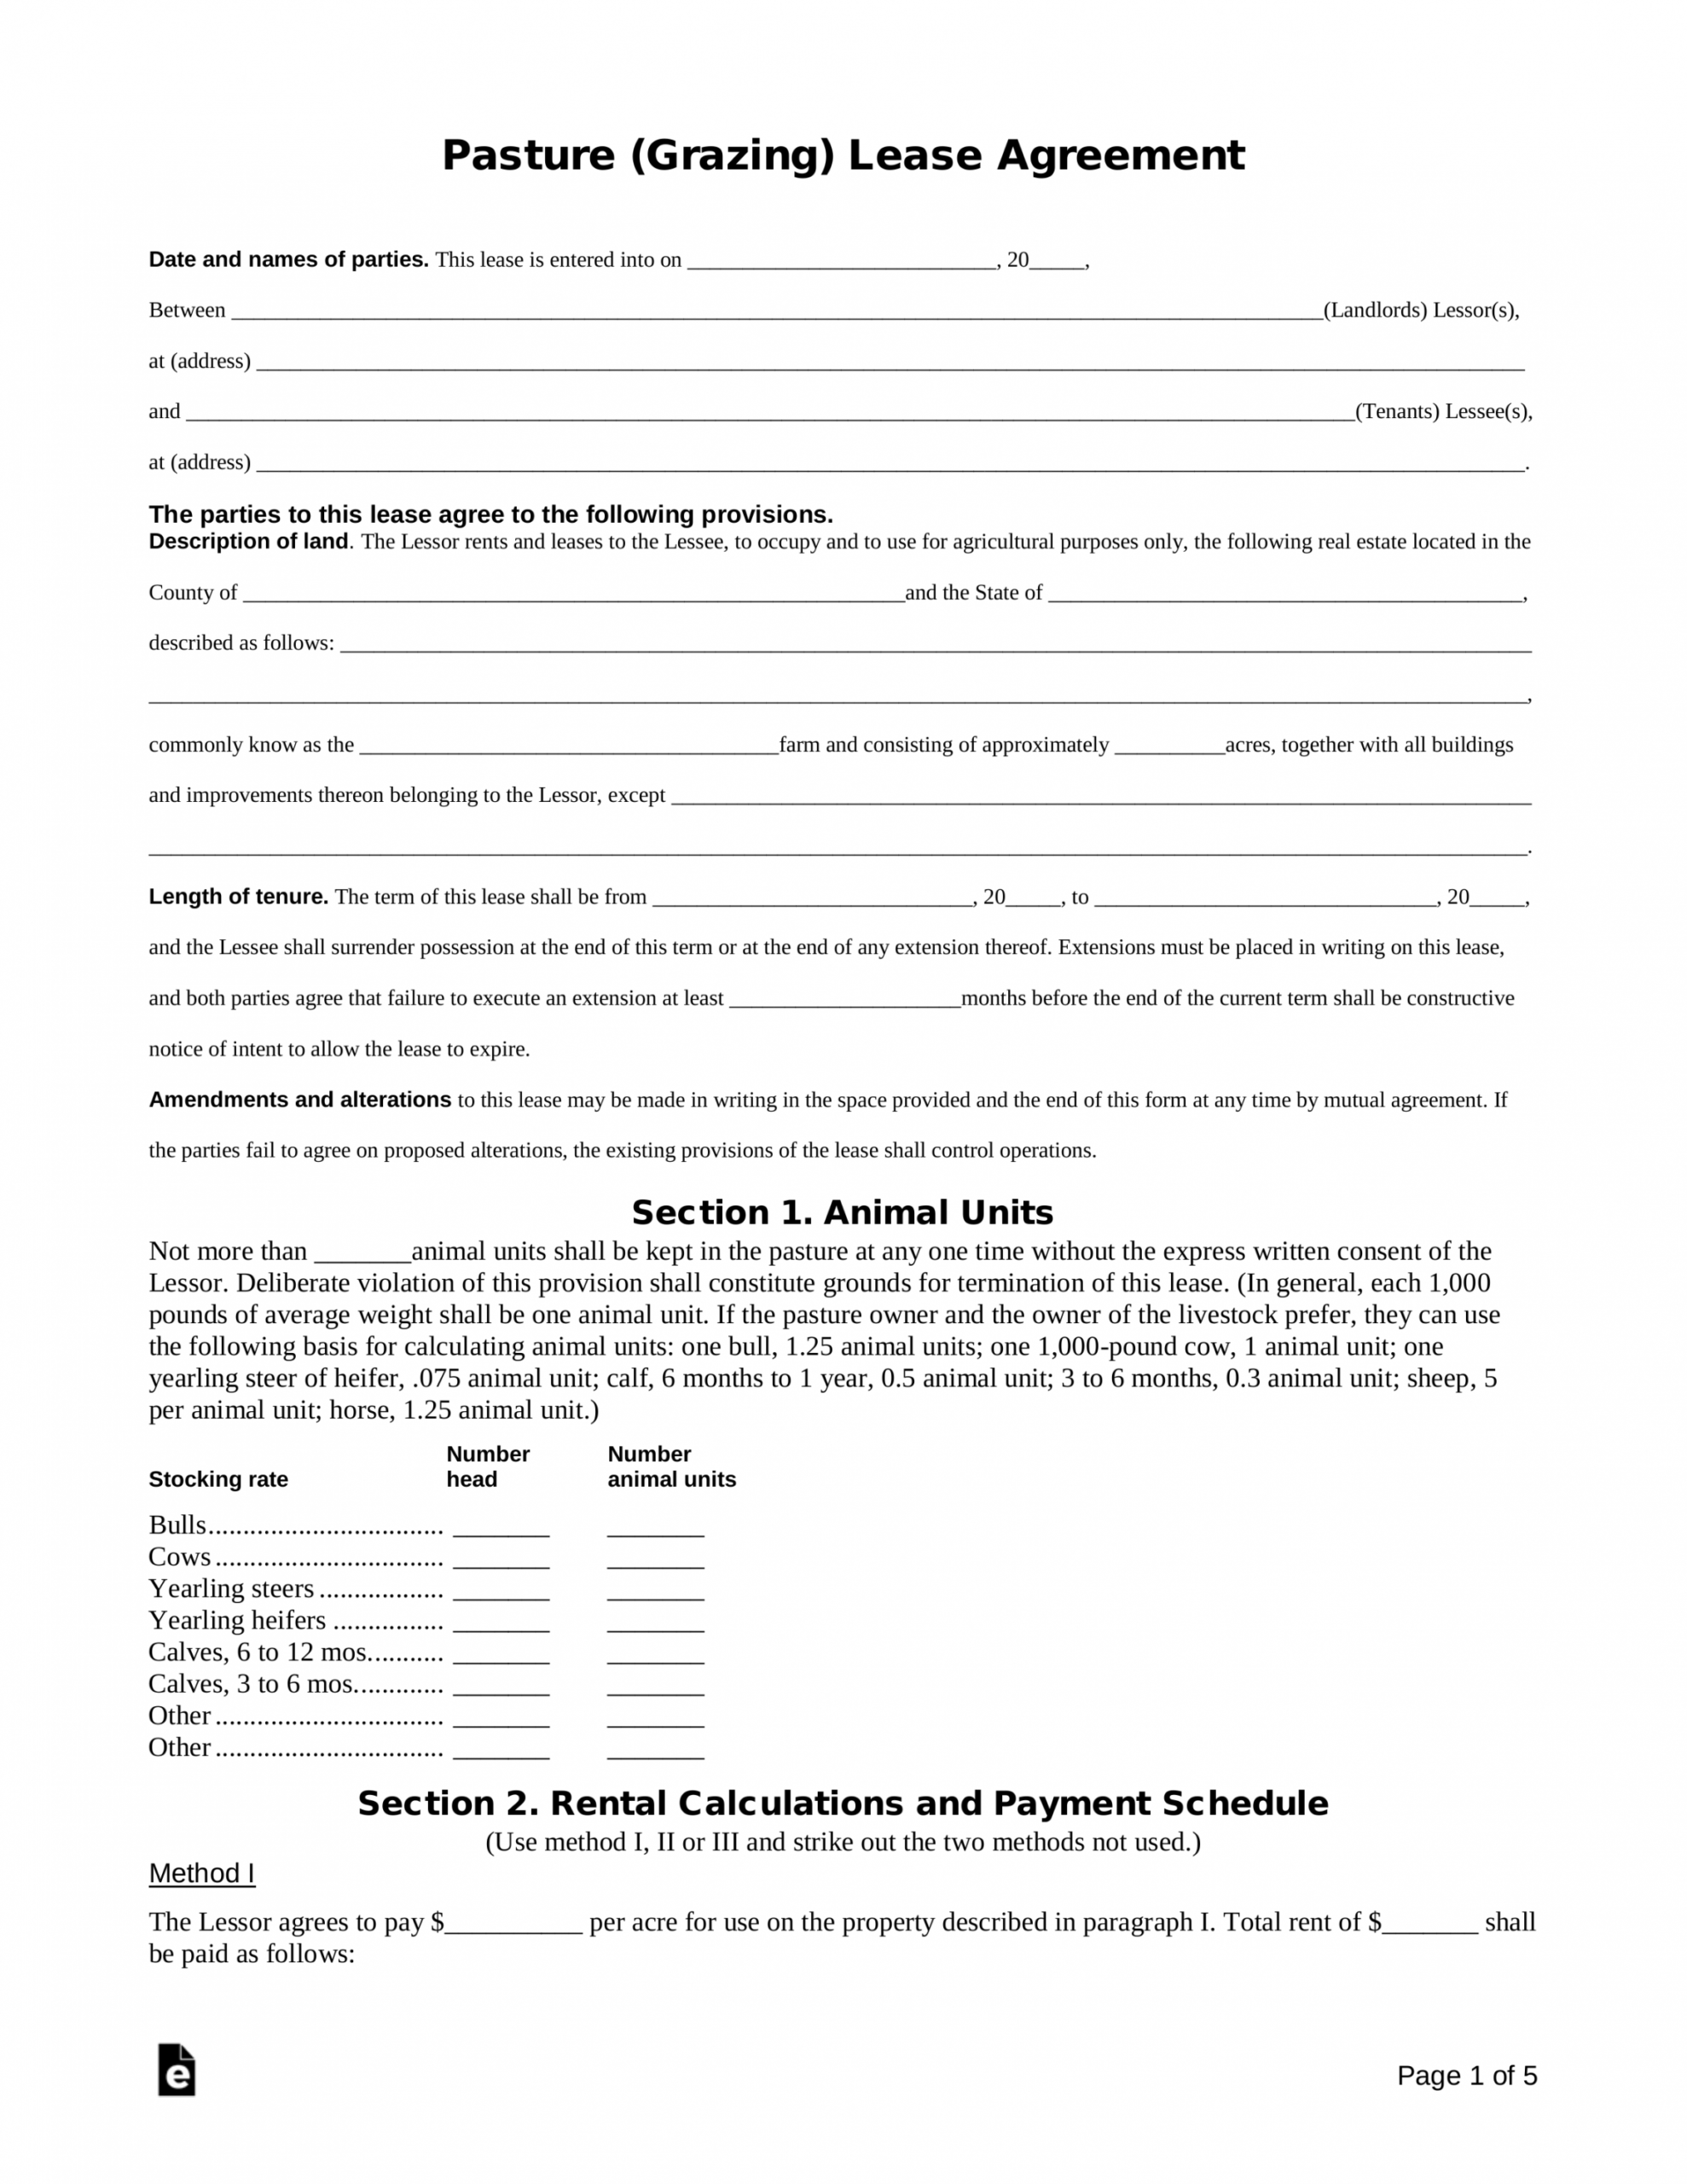 printable free pasture grazing rental lease agreement template  pdf hay lease agreement template sample